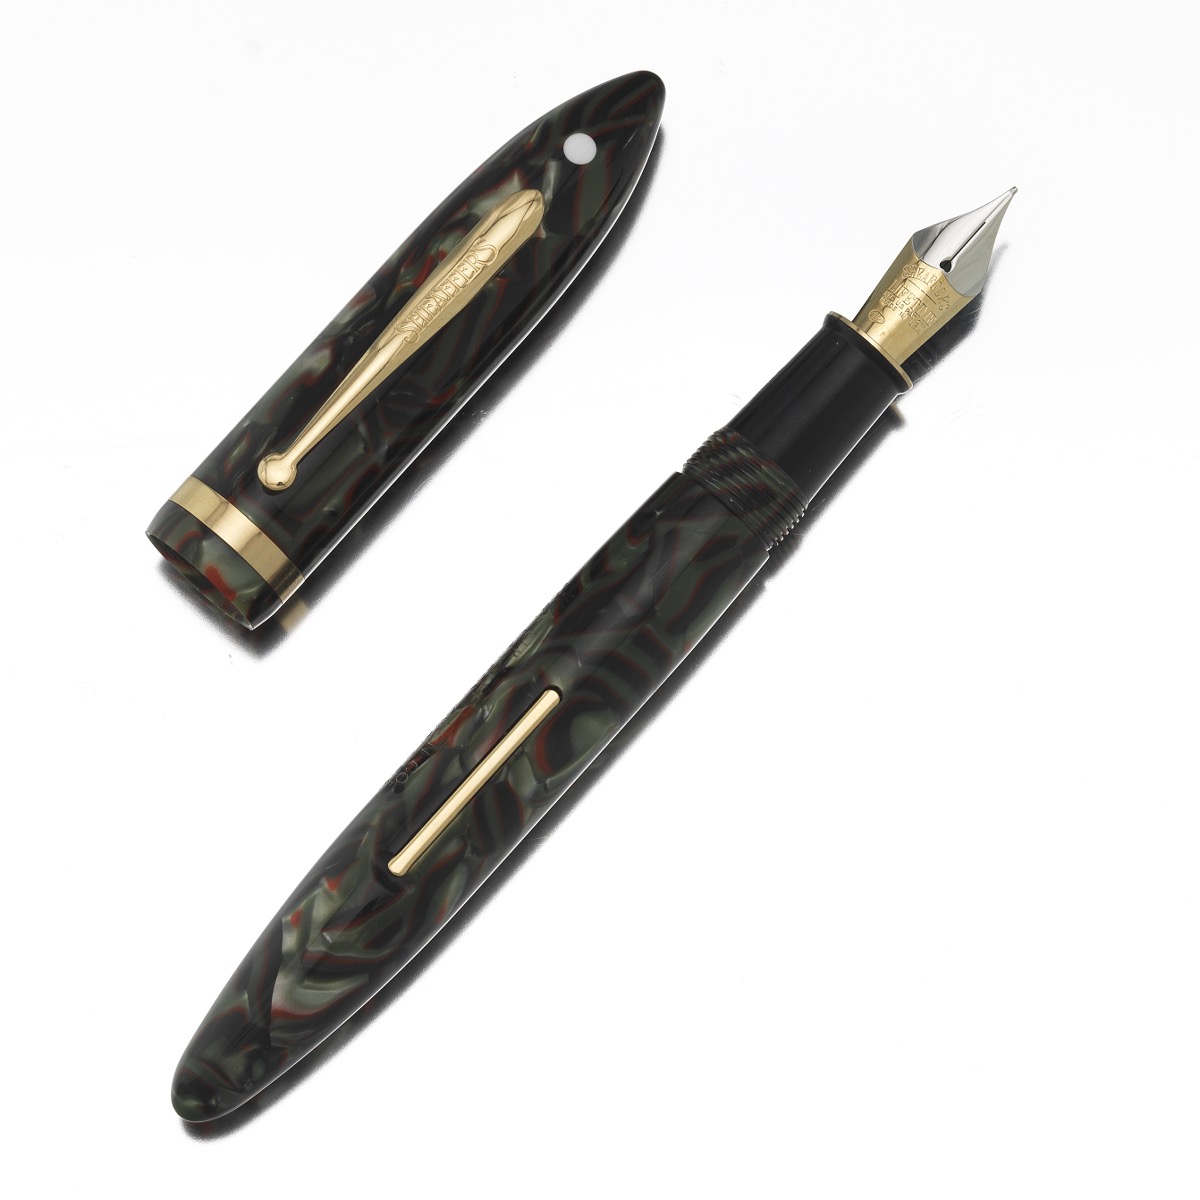 Sheaffer's Balanced Limited Edition Fountain Pen